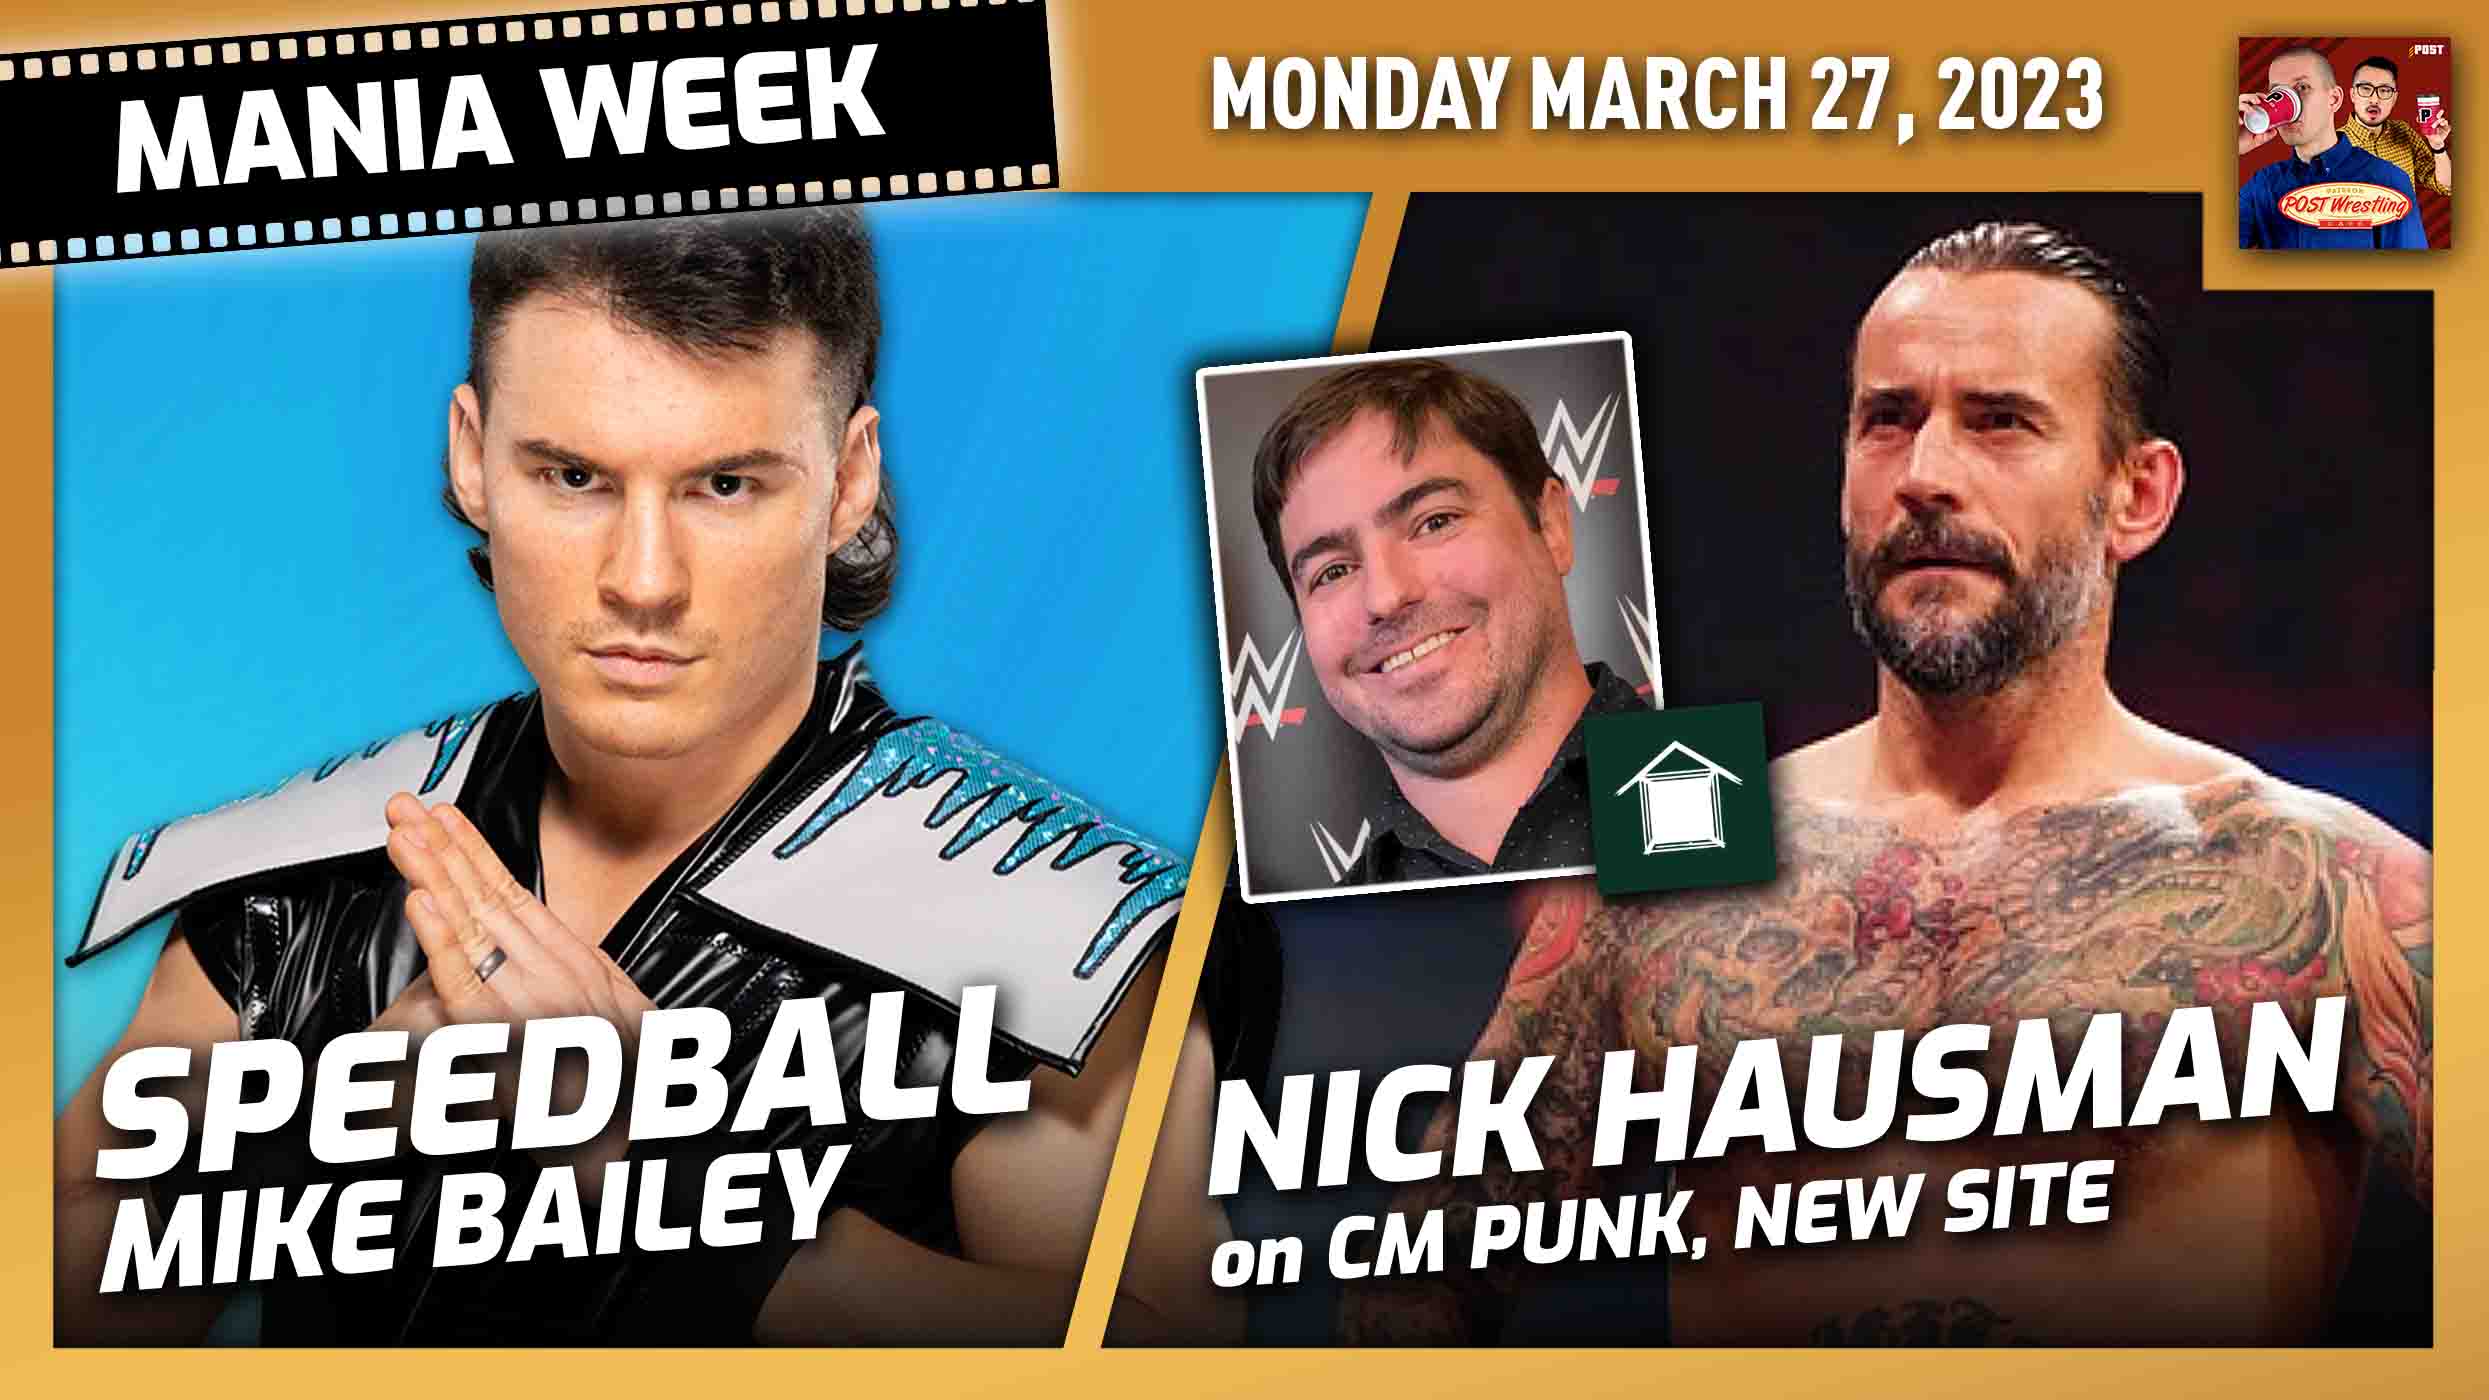 Speedball Mike Bailey, Nick Hausman on CM Punk | MANIA WEEK - POST Wrestling | WWE AEW NXT NJPW Podcasts, News, Reviews